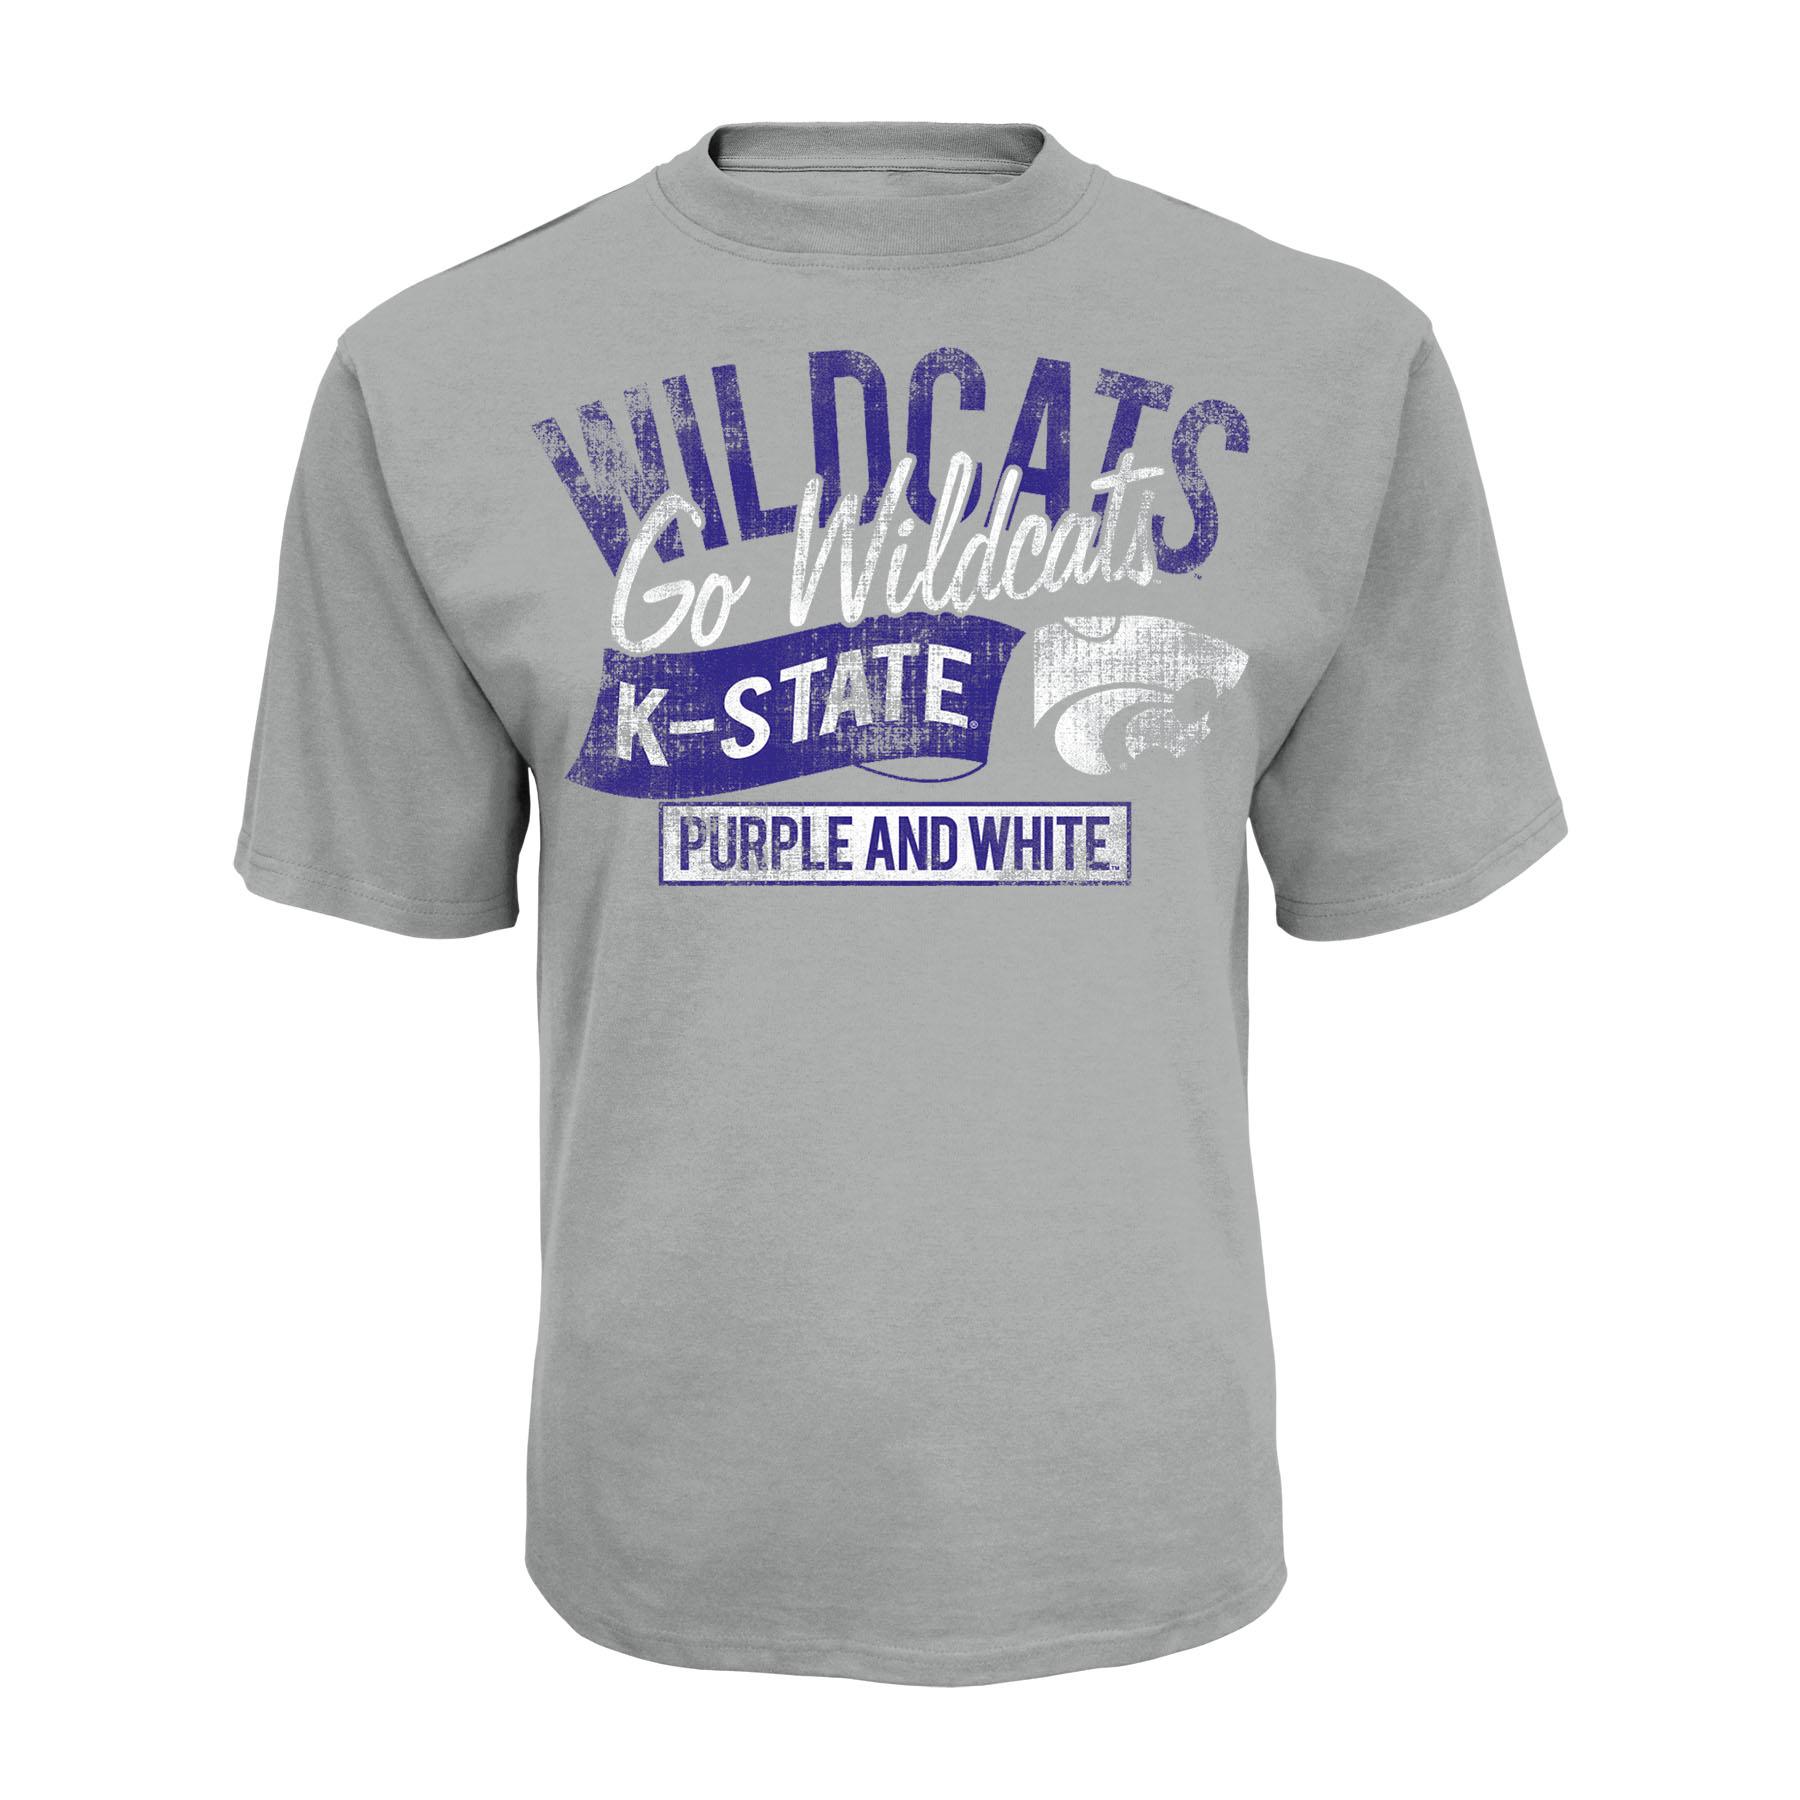 NCAA Men's Distressed Graphic T-Shirt - Kansas State Wildcats